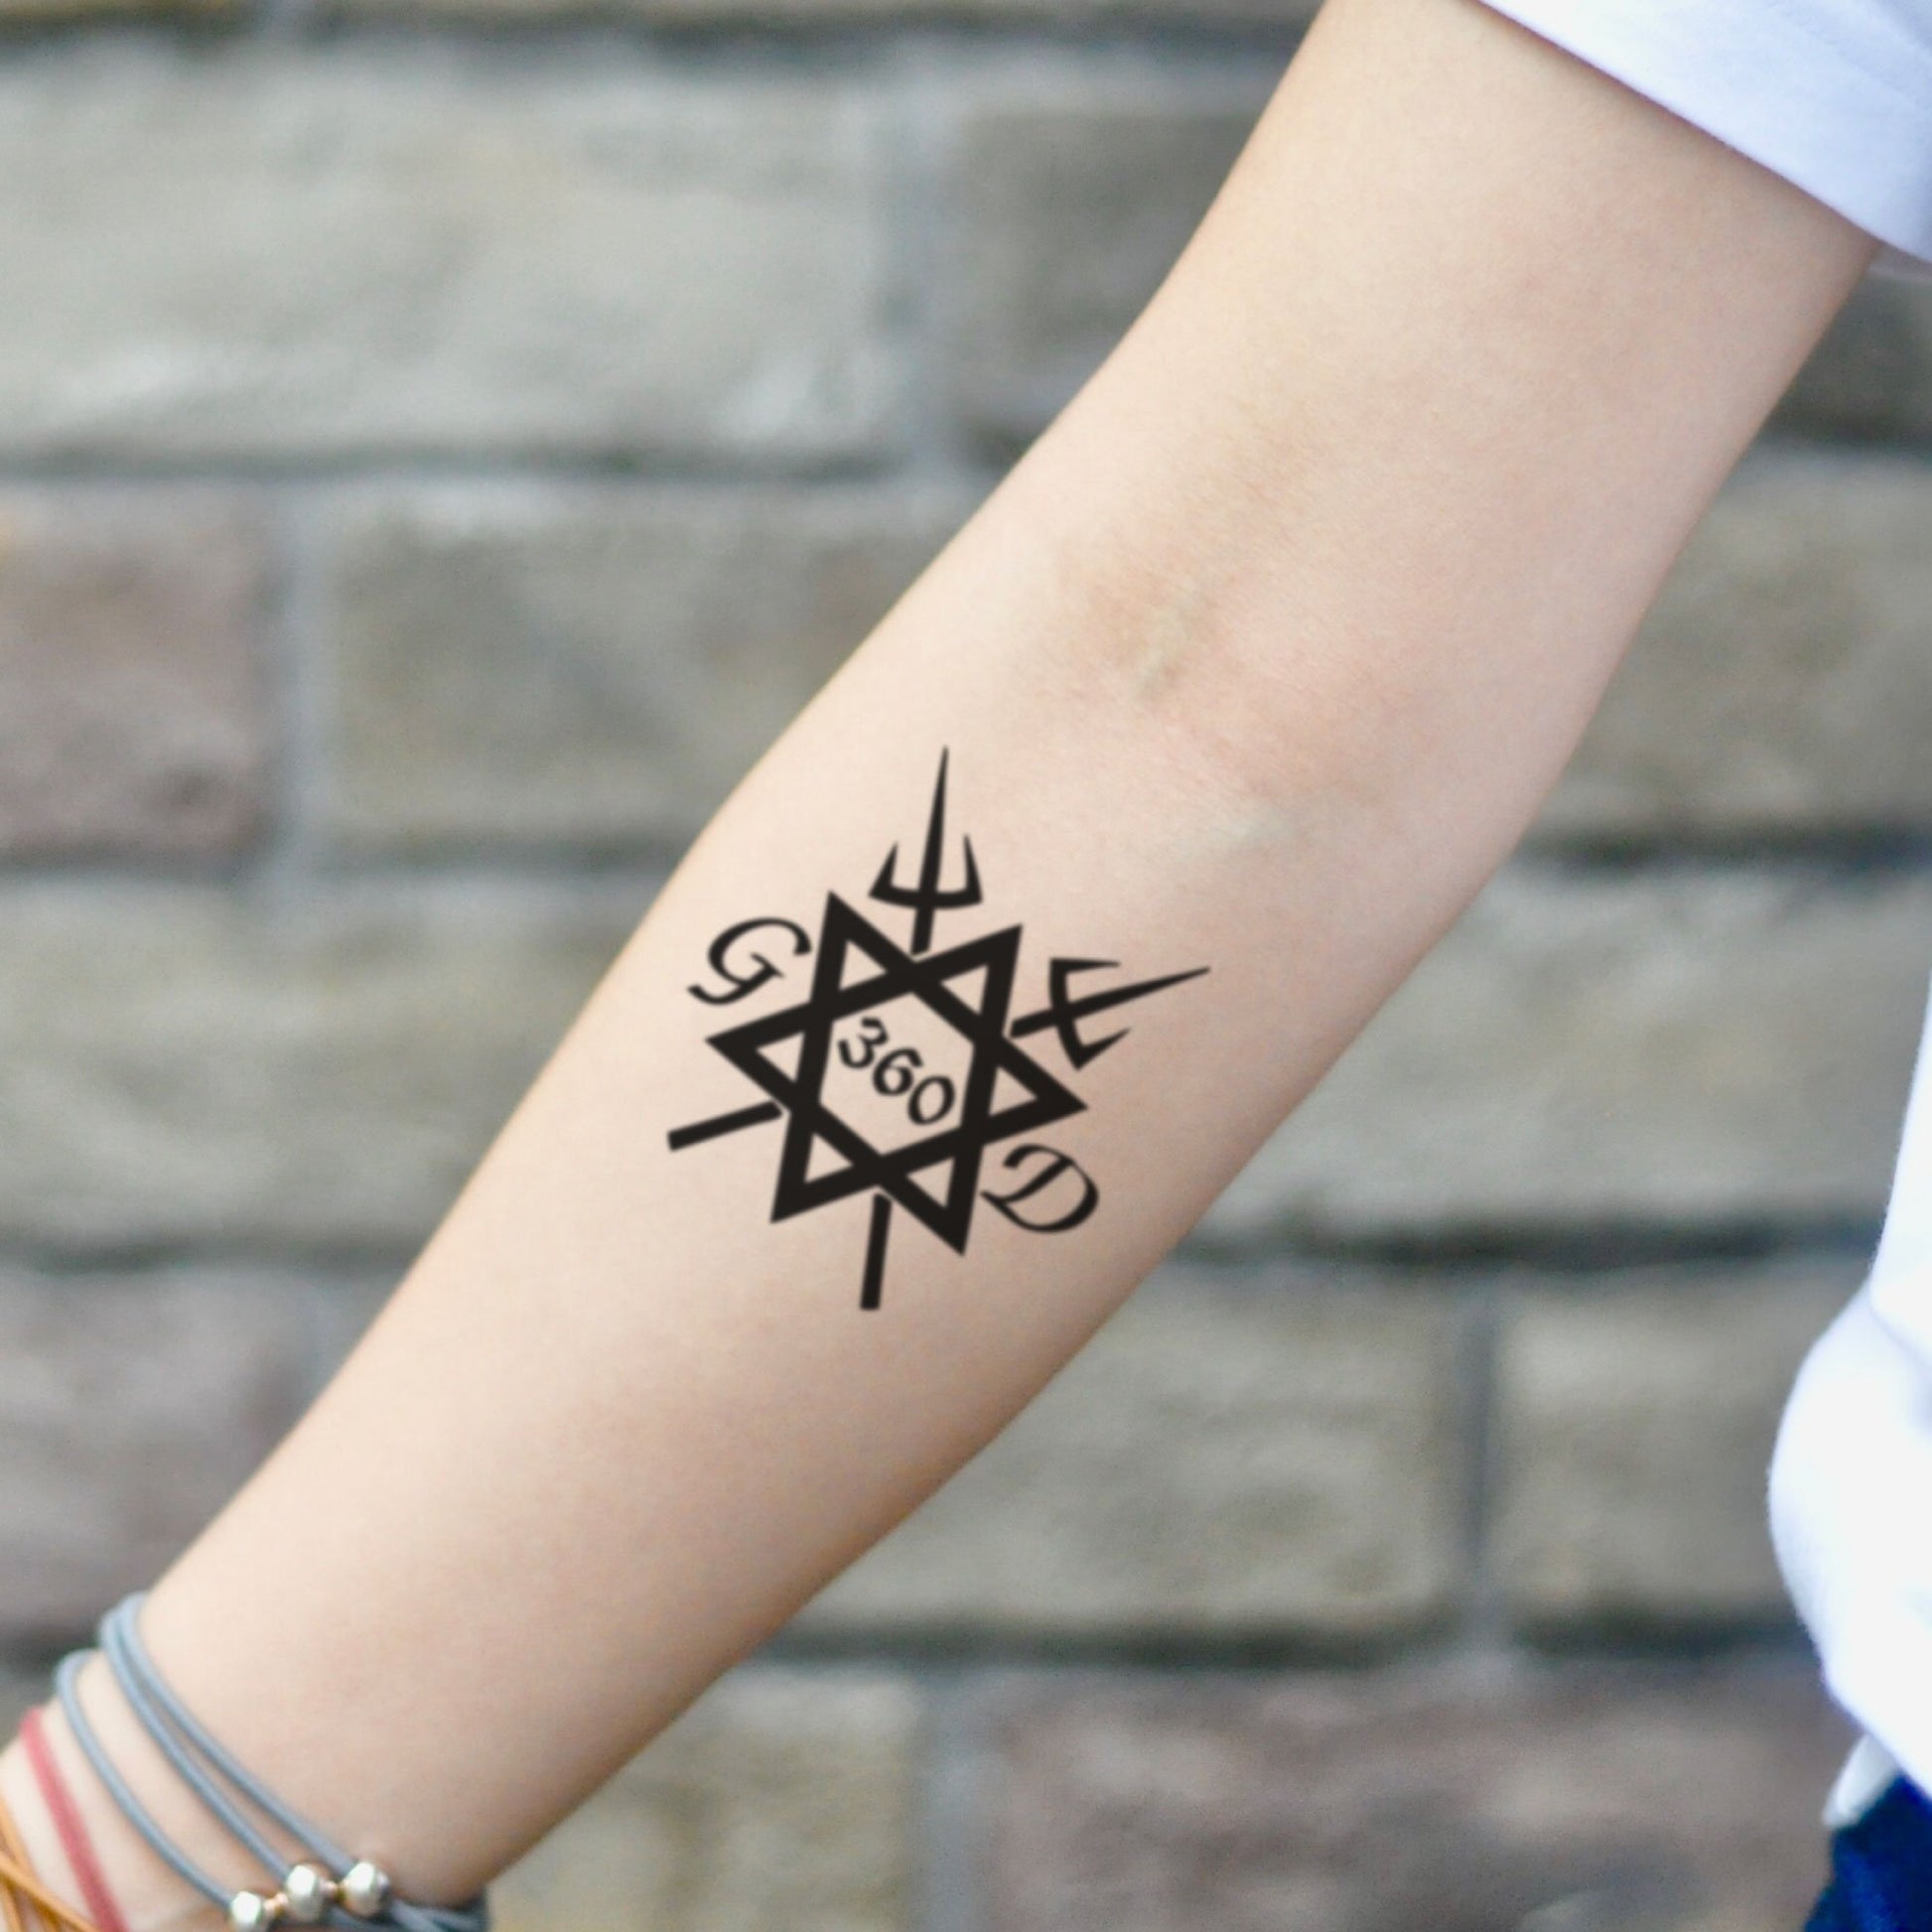 fake small gangster disciples illustrative temporary tattoo sticker design idea on inner arm